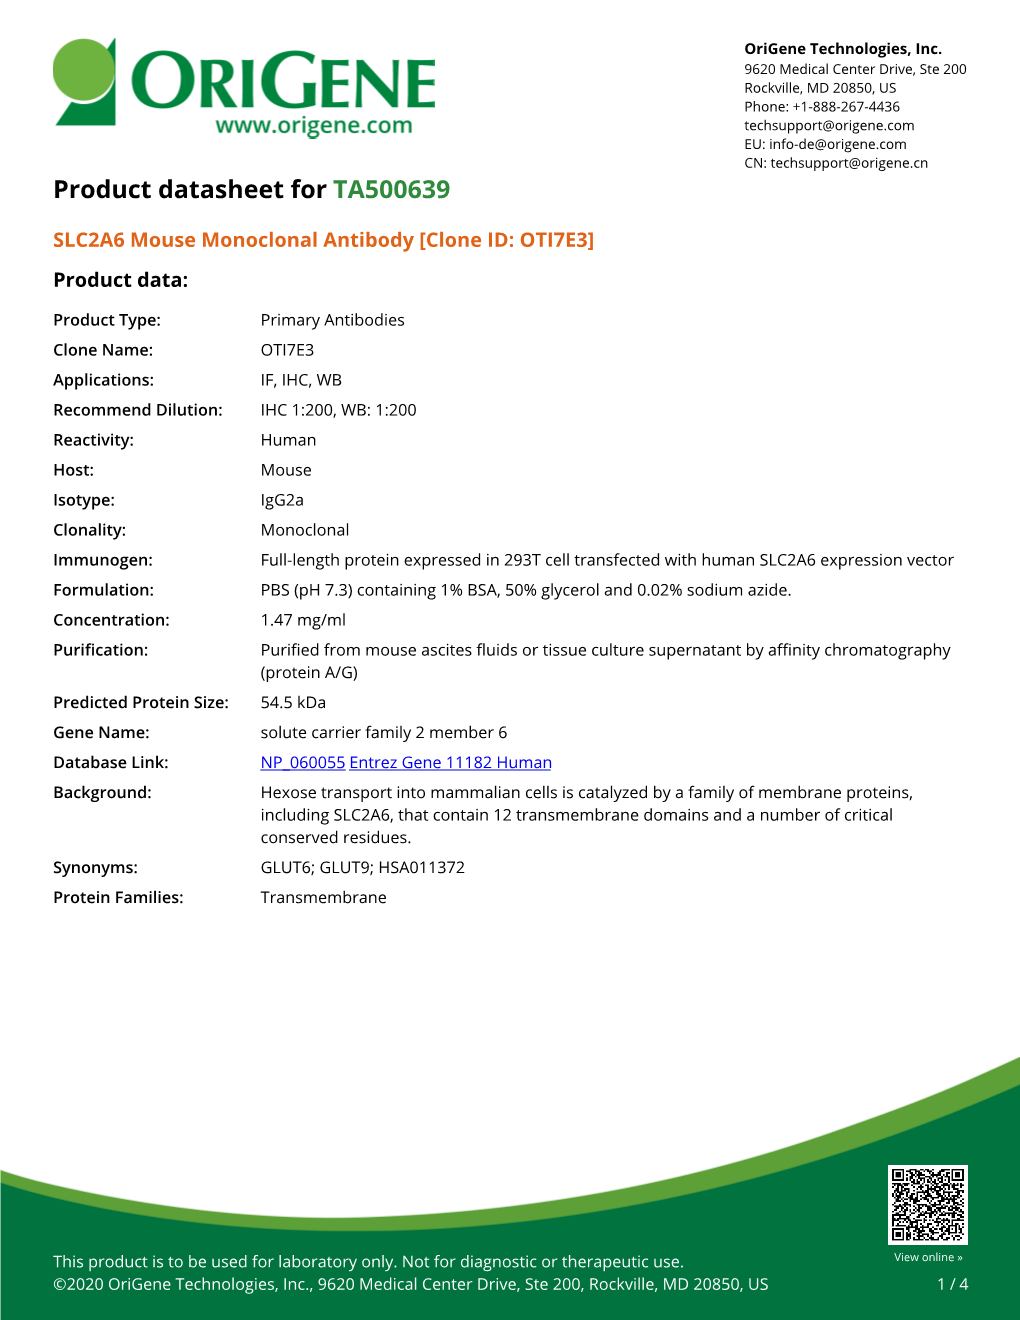 SLC2A6 Mouse Monoclonal Antibody [Clone ID: OTI7E3] Product Data